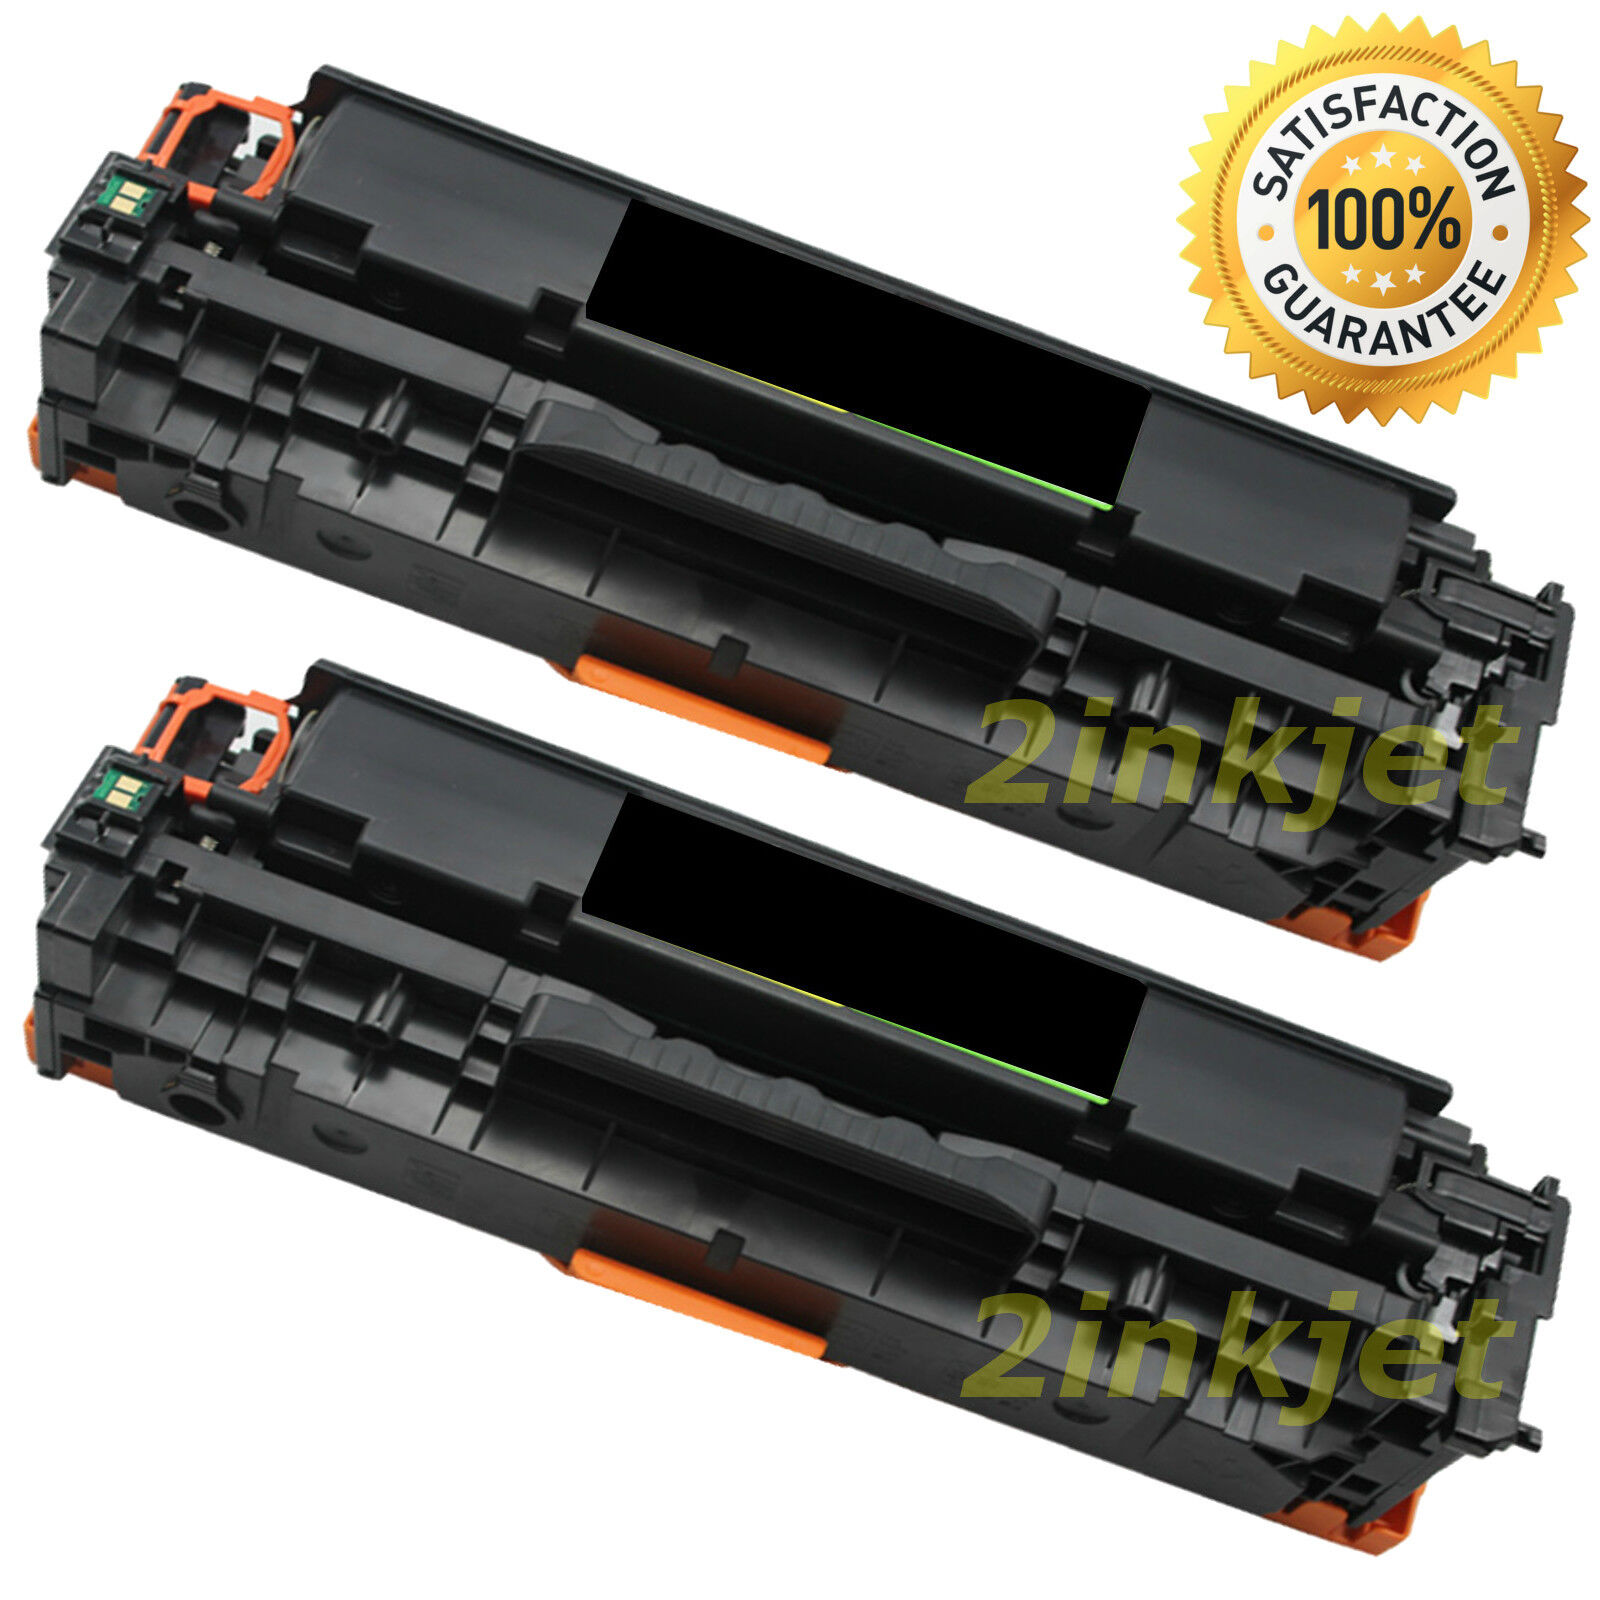 2 x Compatible CF210A 131A Black Toner Cartridge for LaserJet M251n M251nw M276n